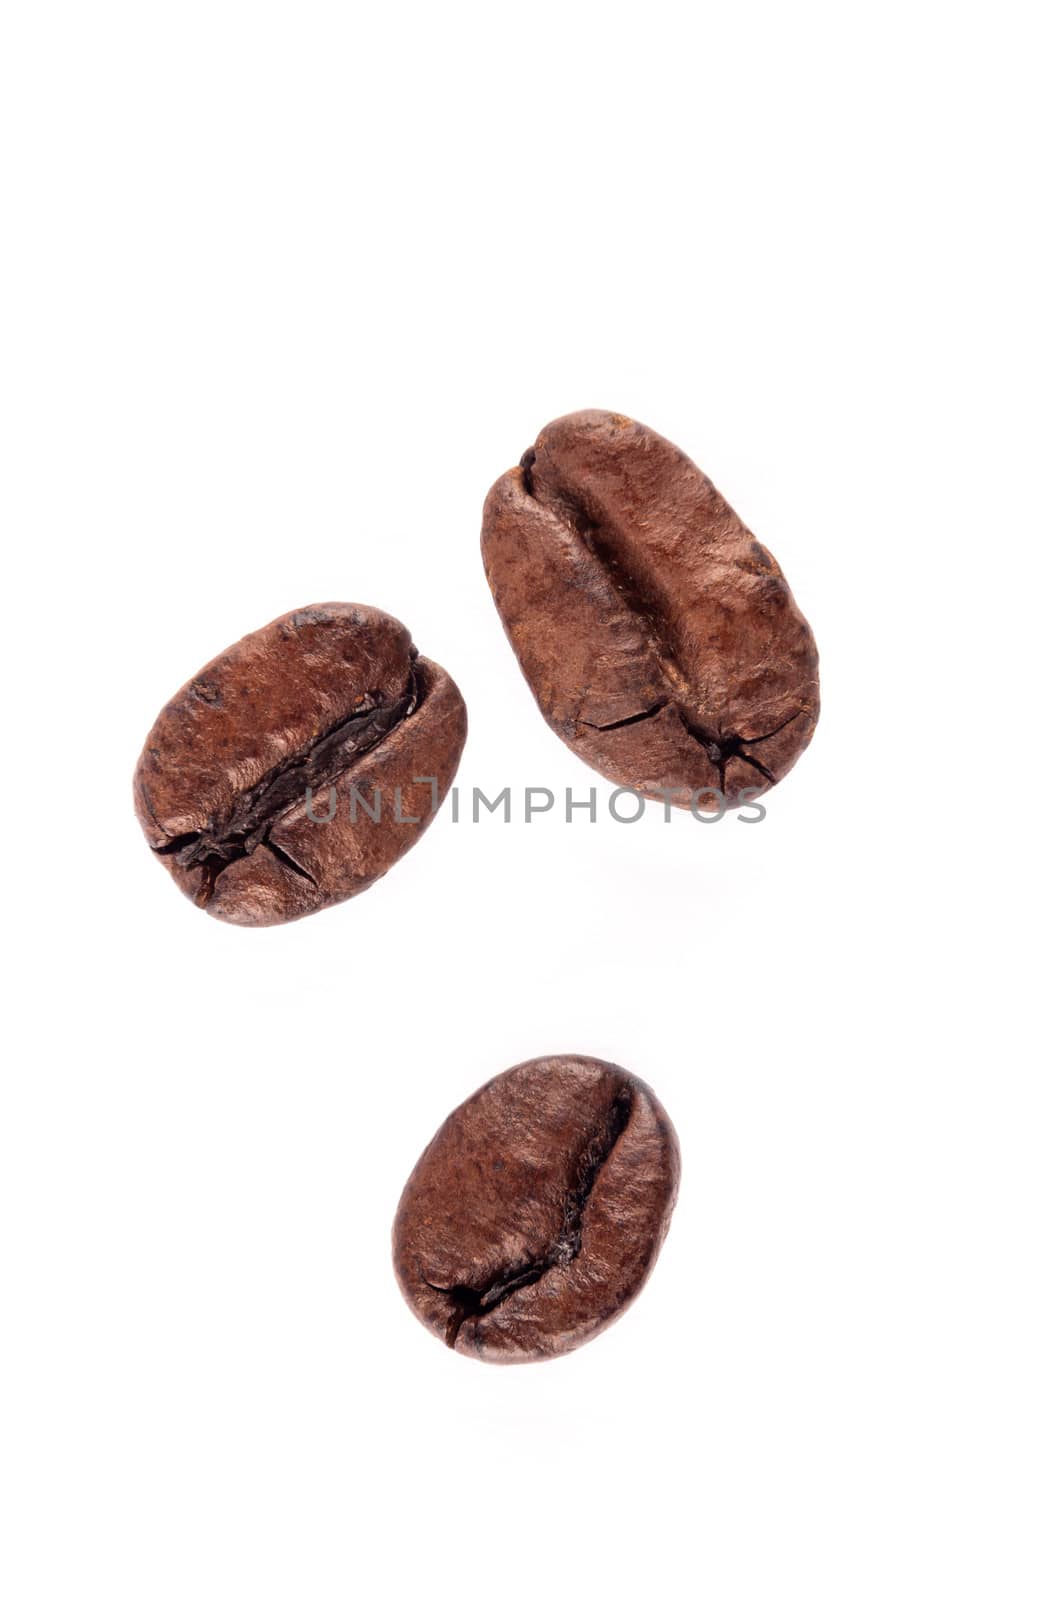 Three Coffee beans on wihte background, macro